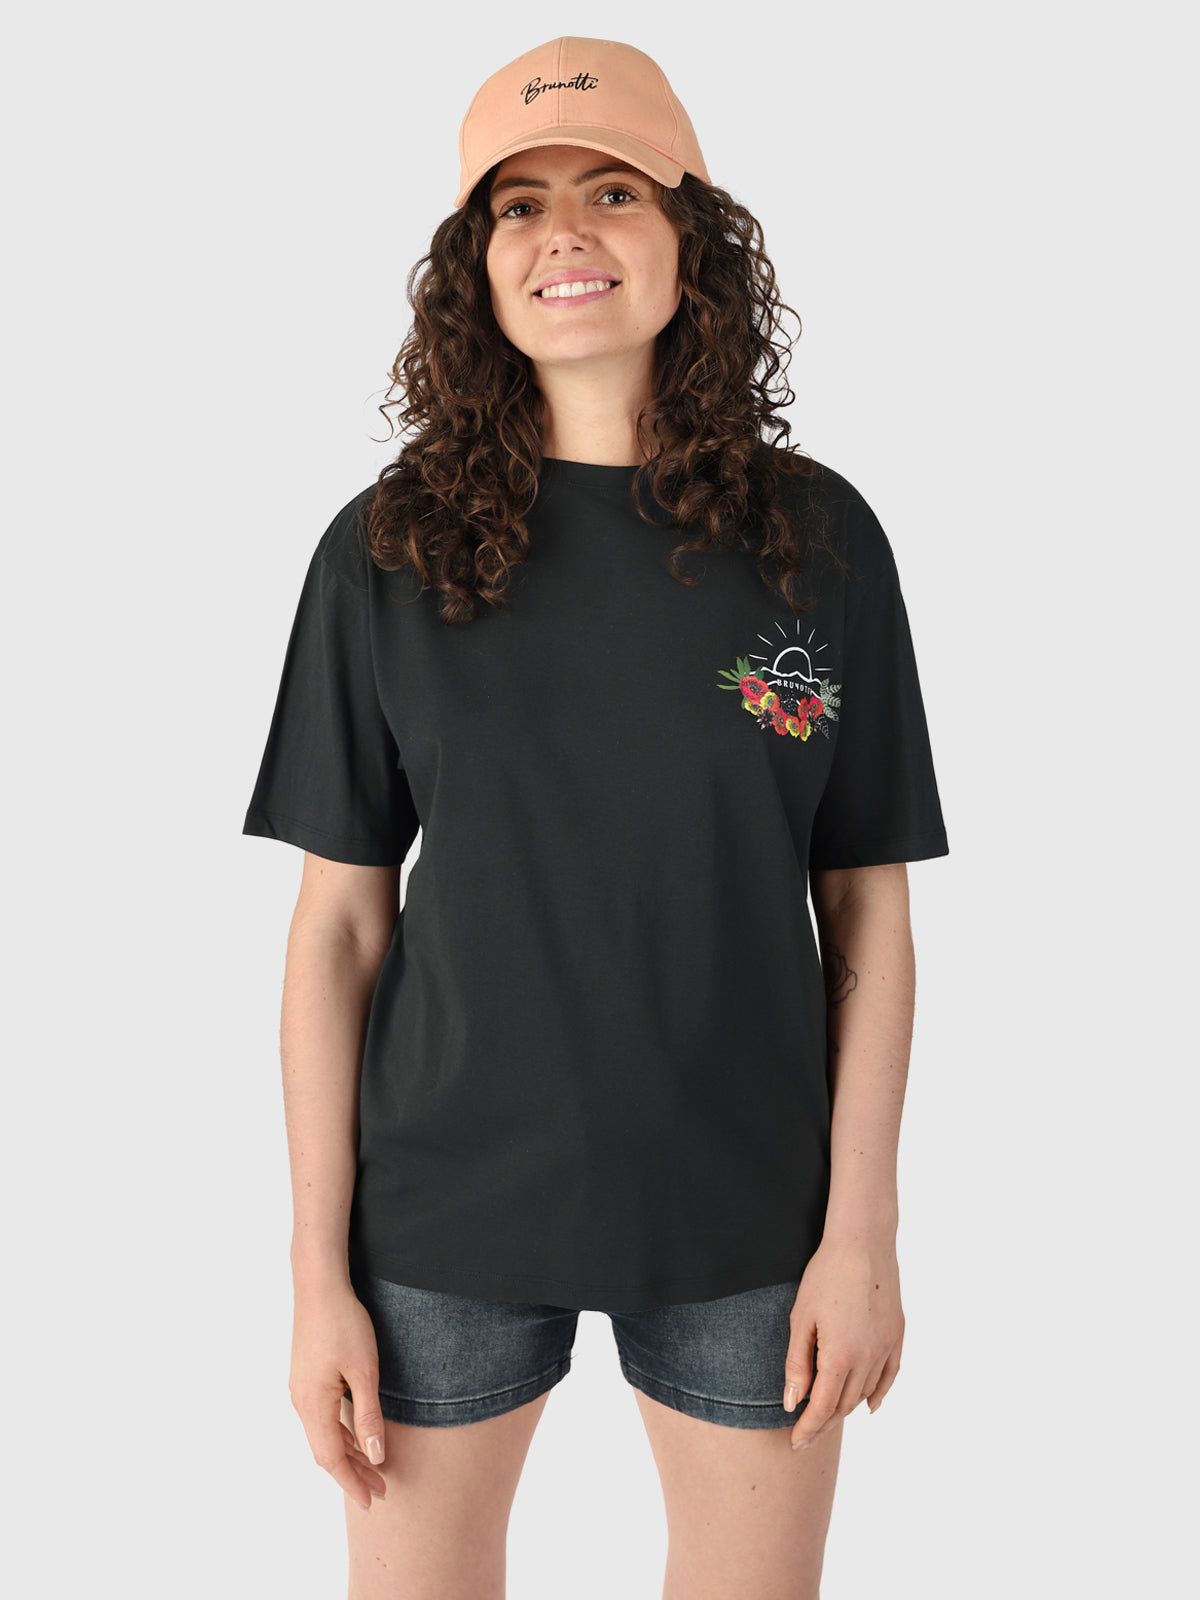 Sale - & Women T-Shirts Tops